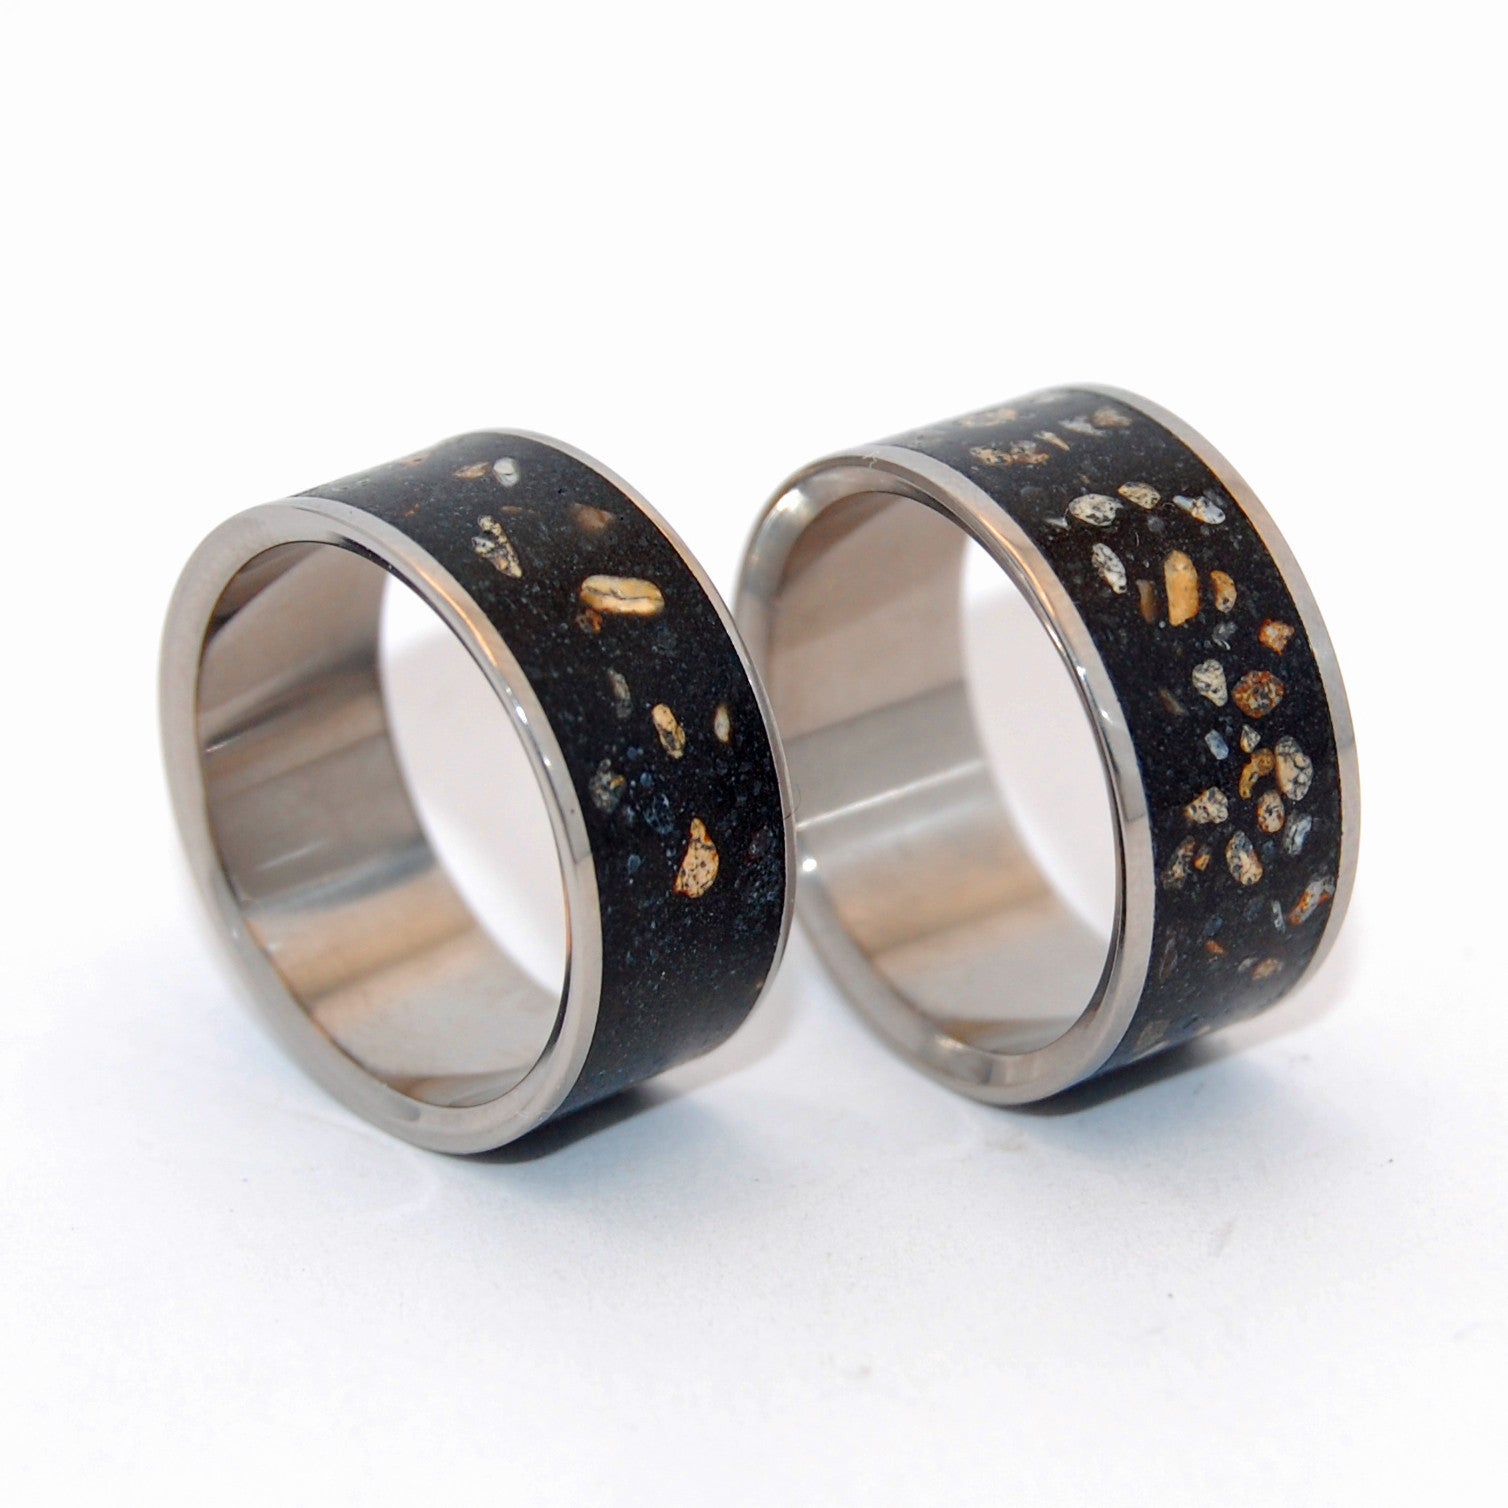 Stone & Concrete Inlay Titanium Wedding Rings - Minter and Richter Designs